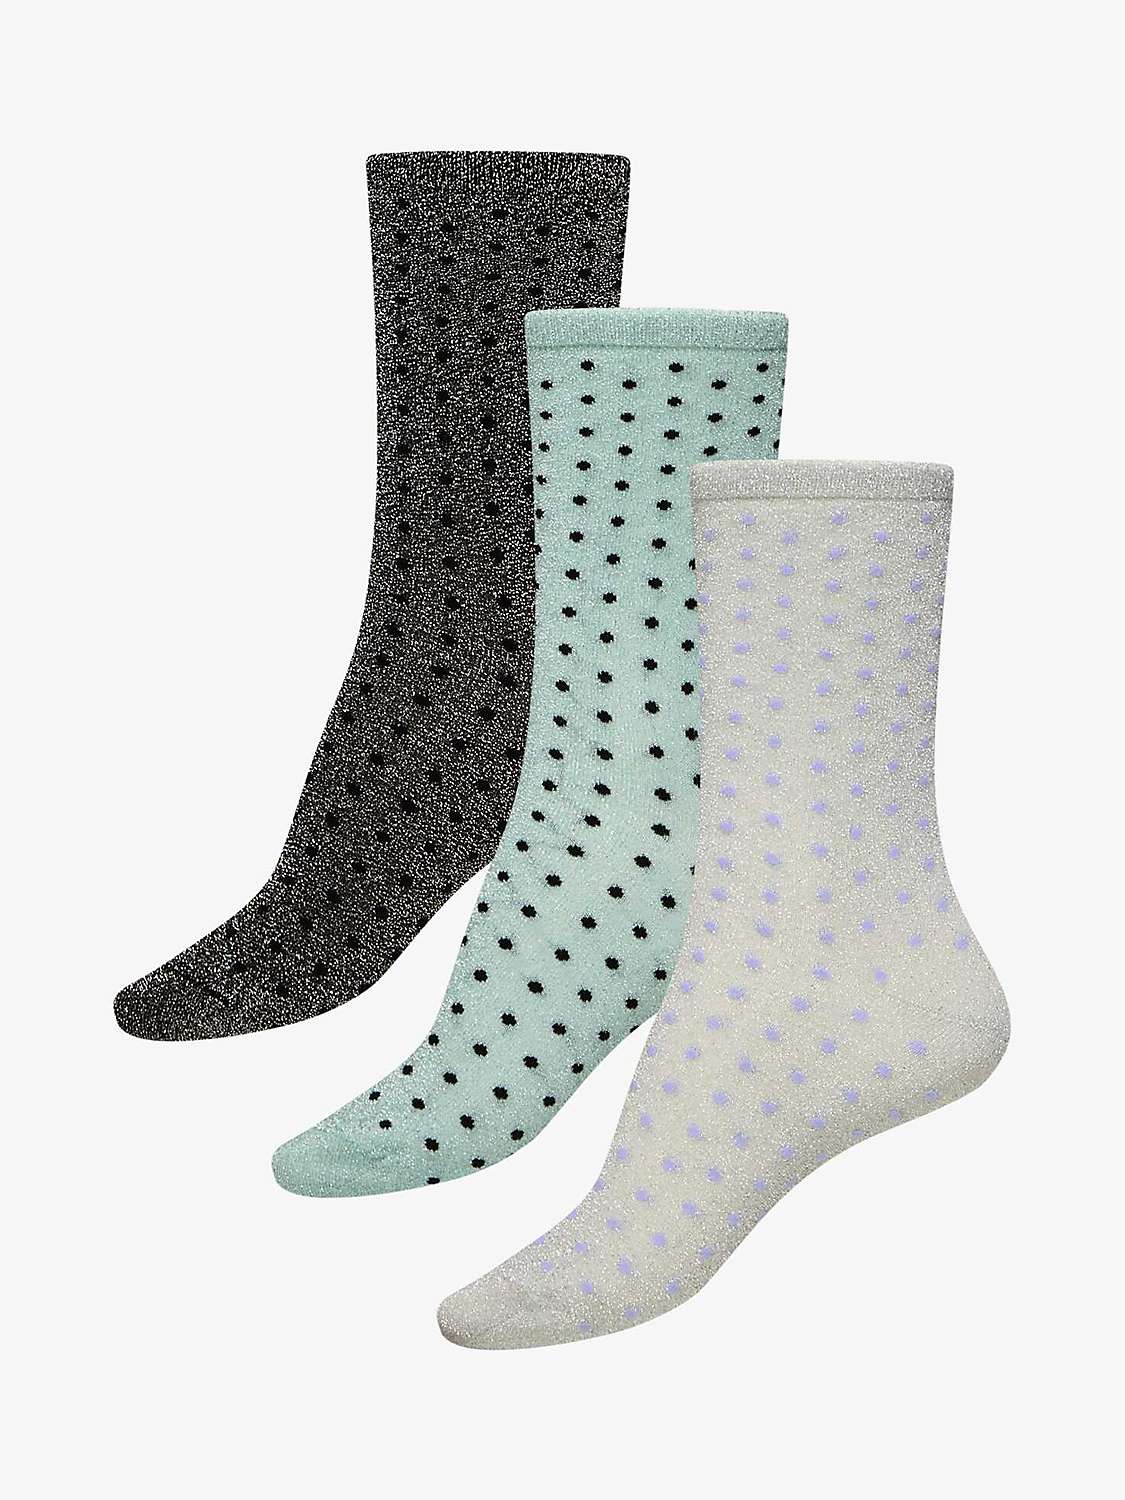 Buy Unmade Copenhagen Moonlight Spot Ankle Socks, Pack of 3, Purple/Multi Online at johnlewis.com